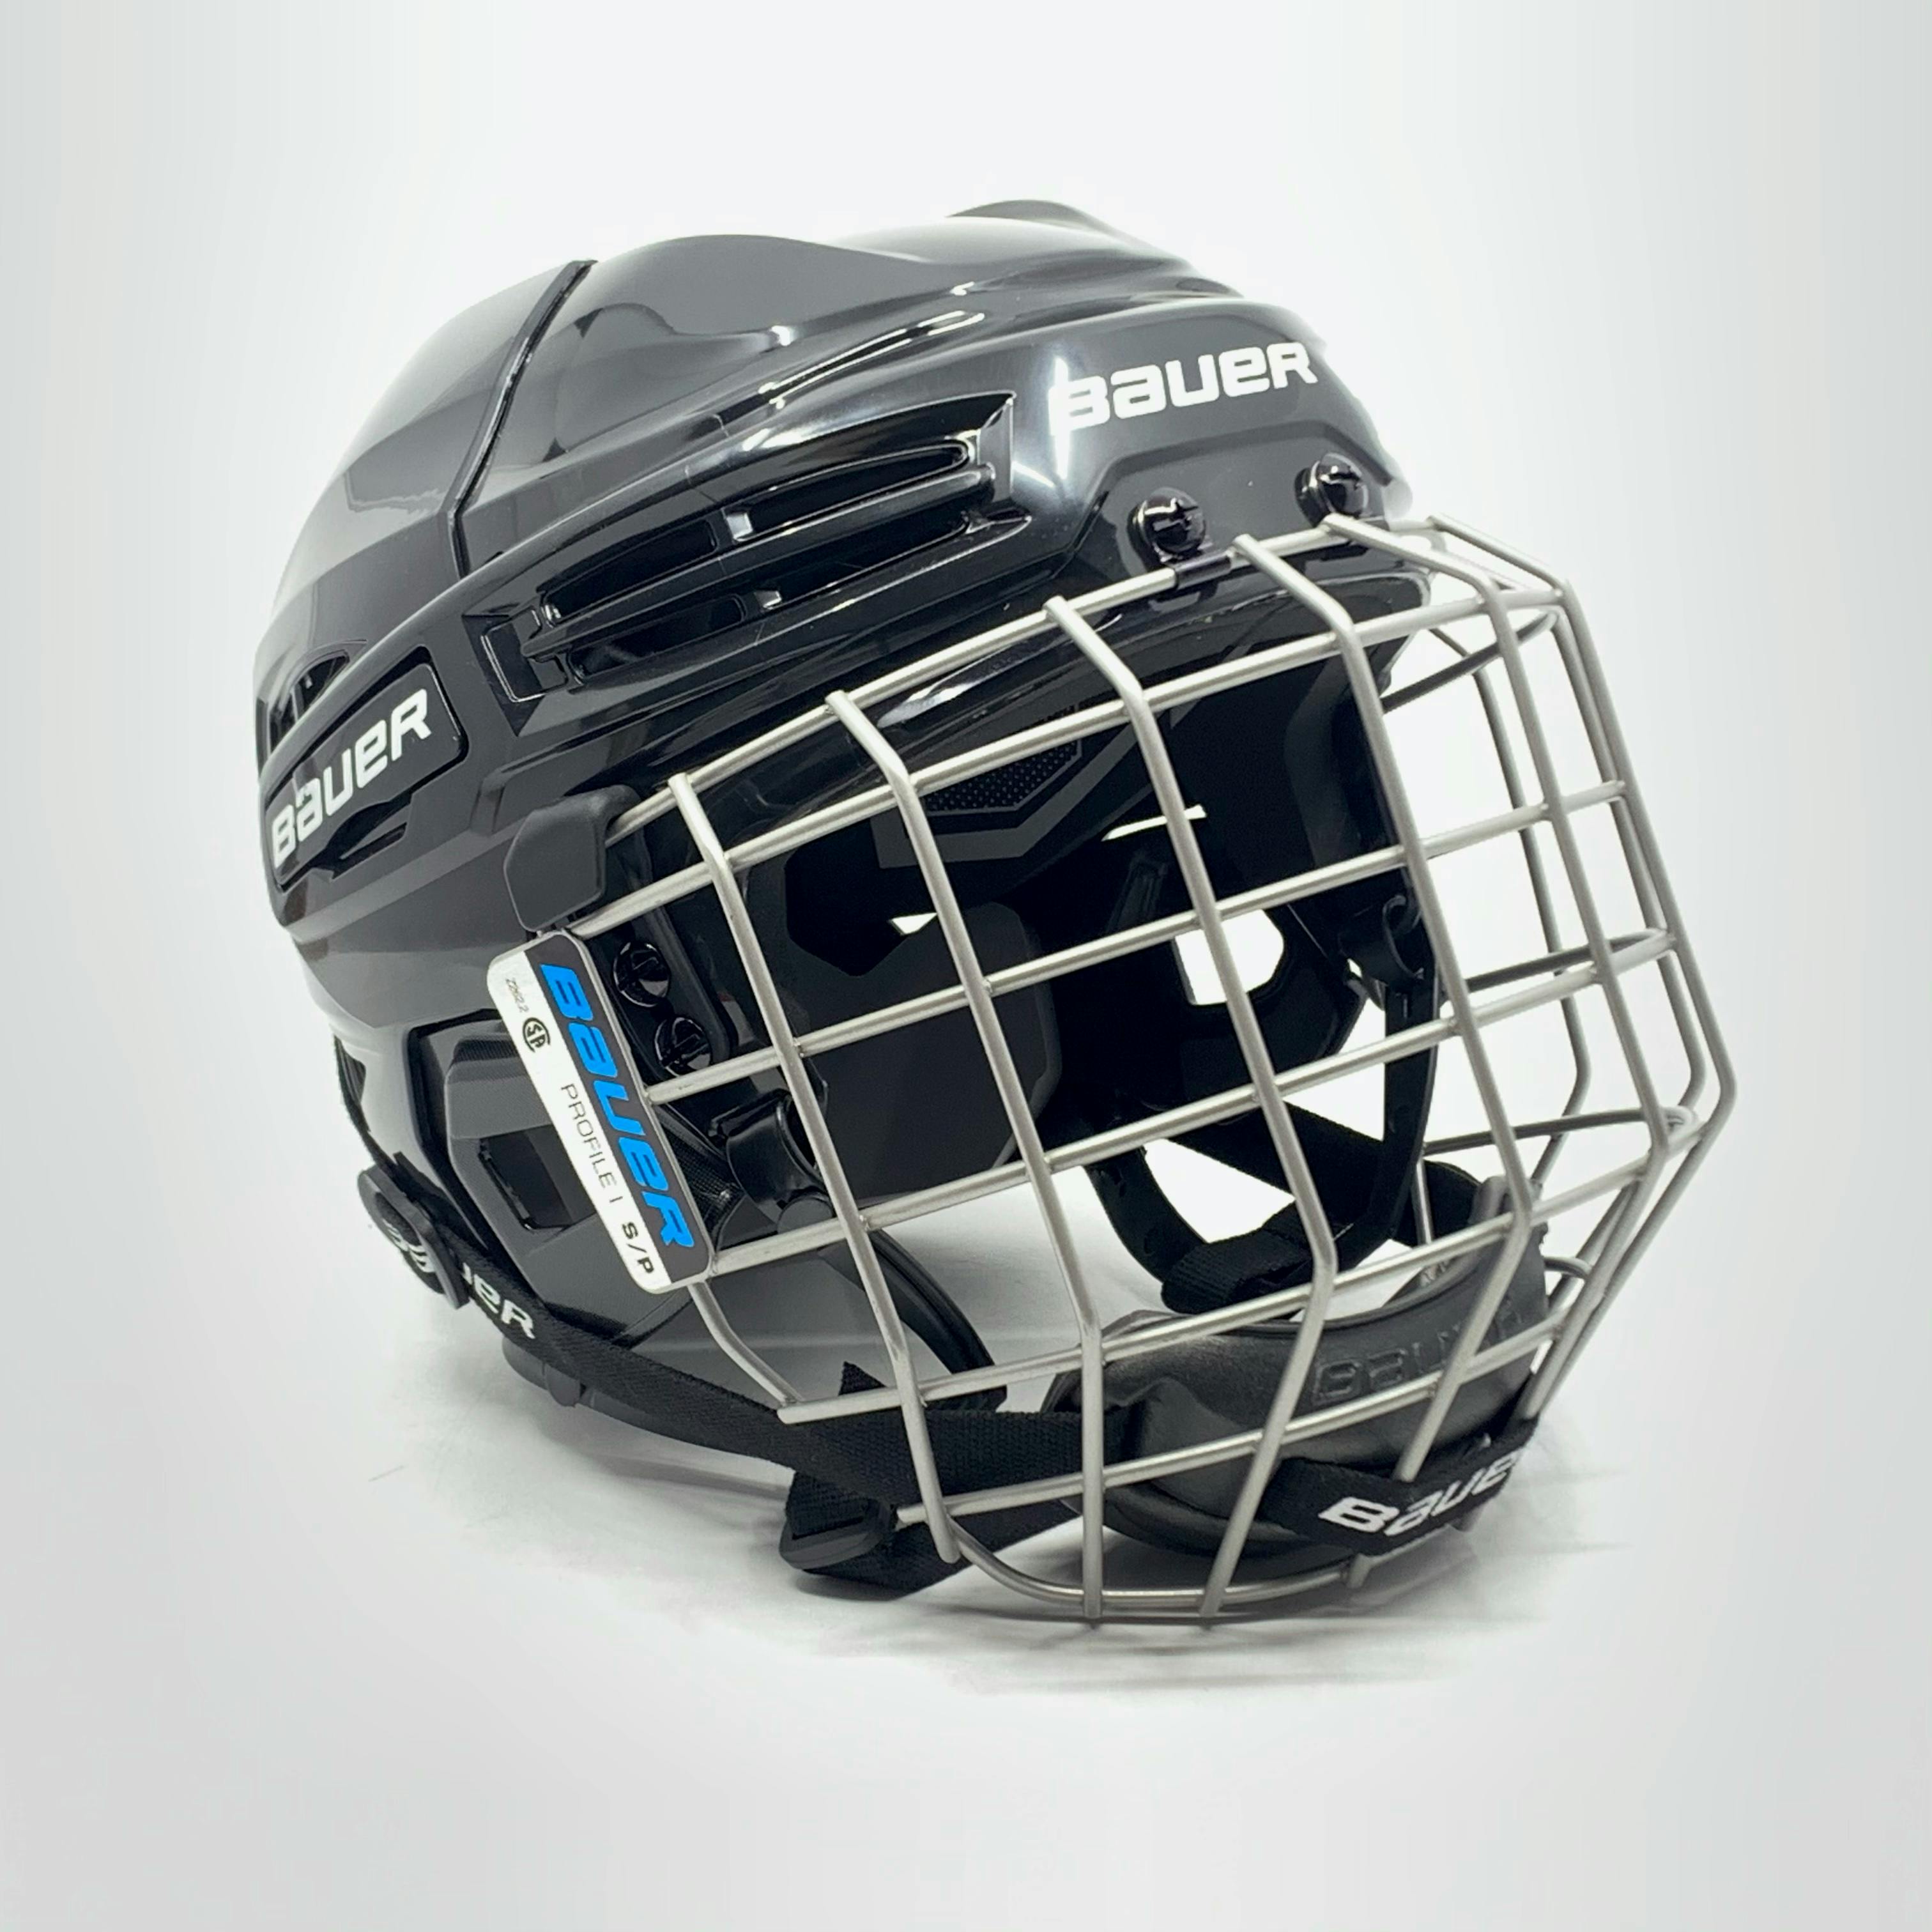 New Bauer IMS 5.0 Helmet Combo Large Black Ice Hockey / Helmets